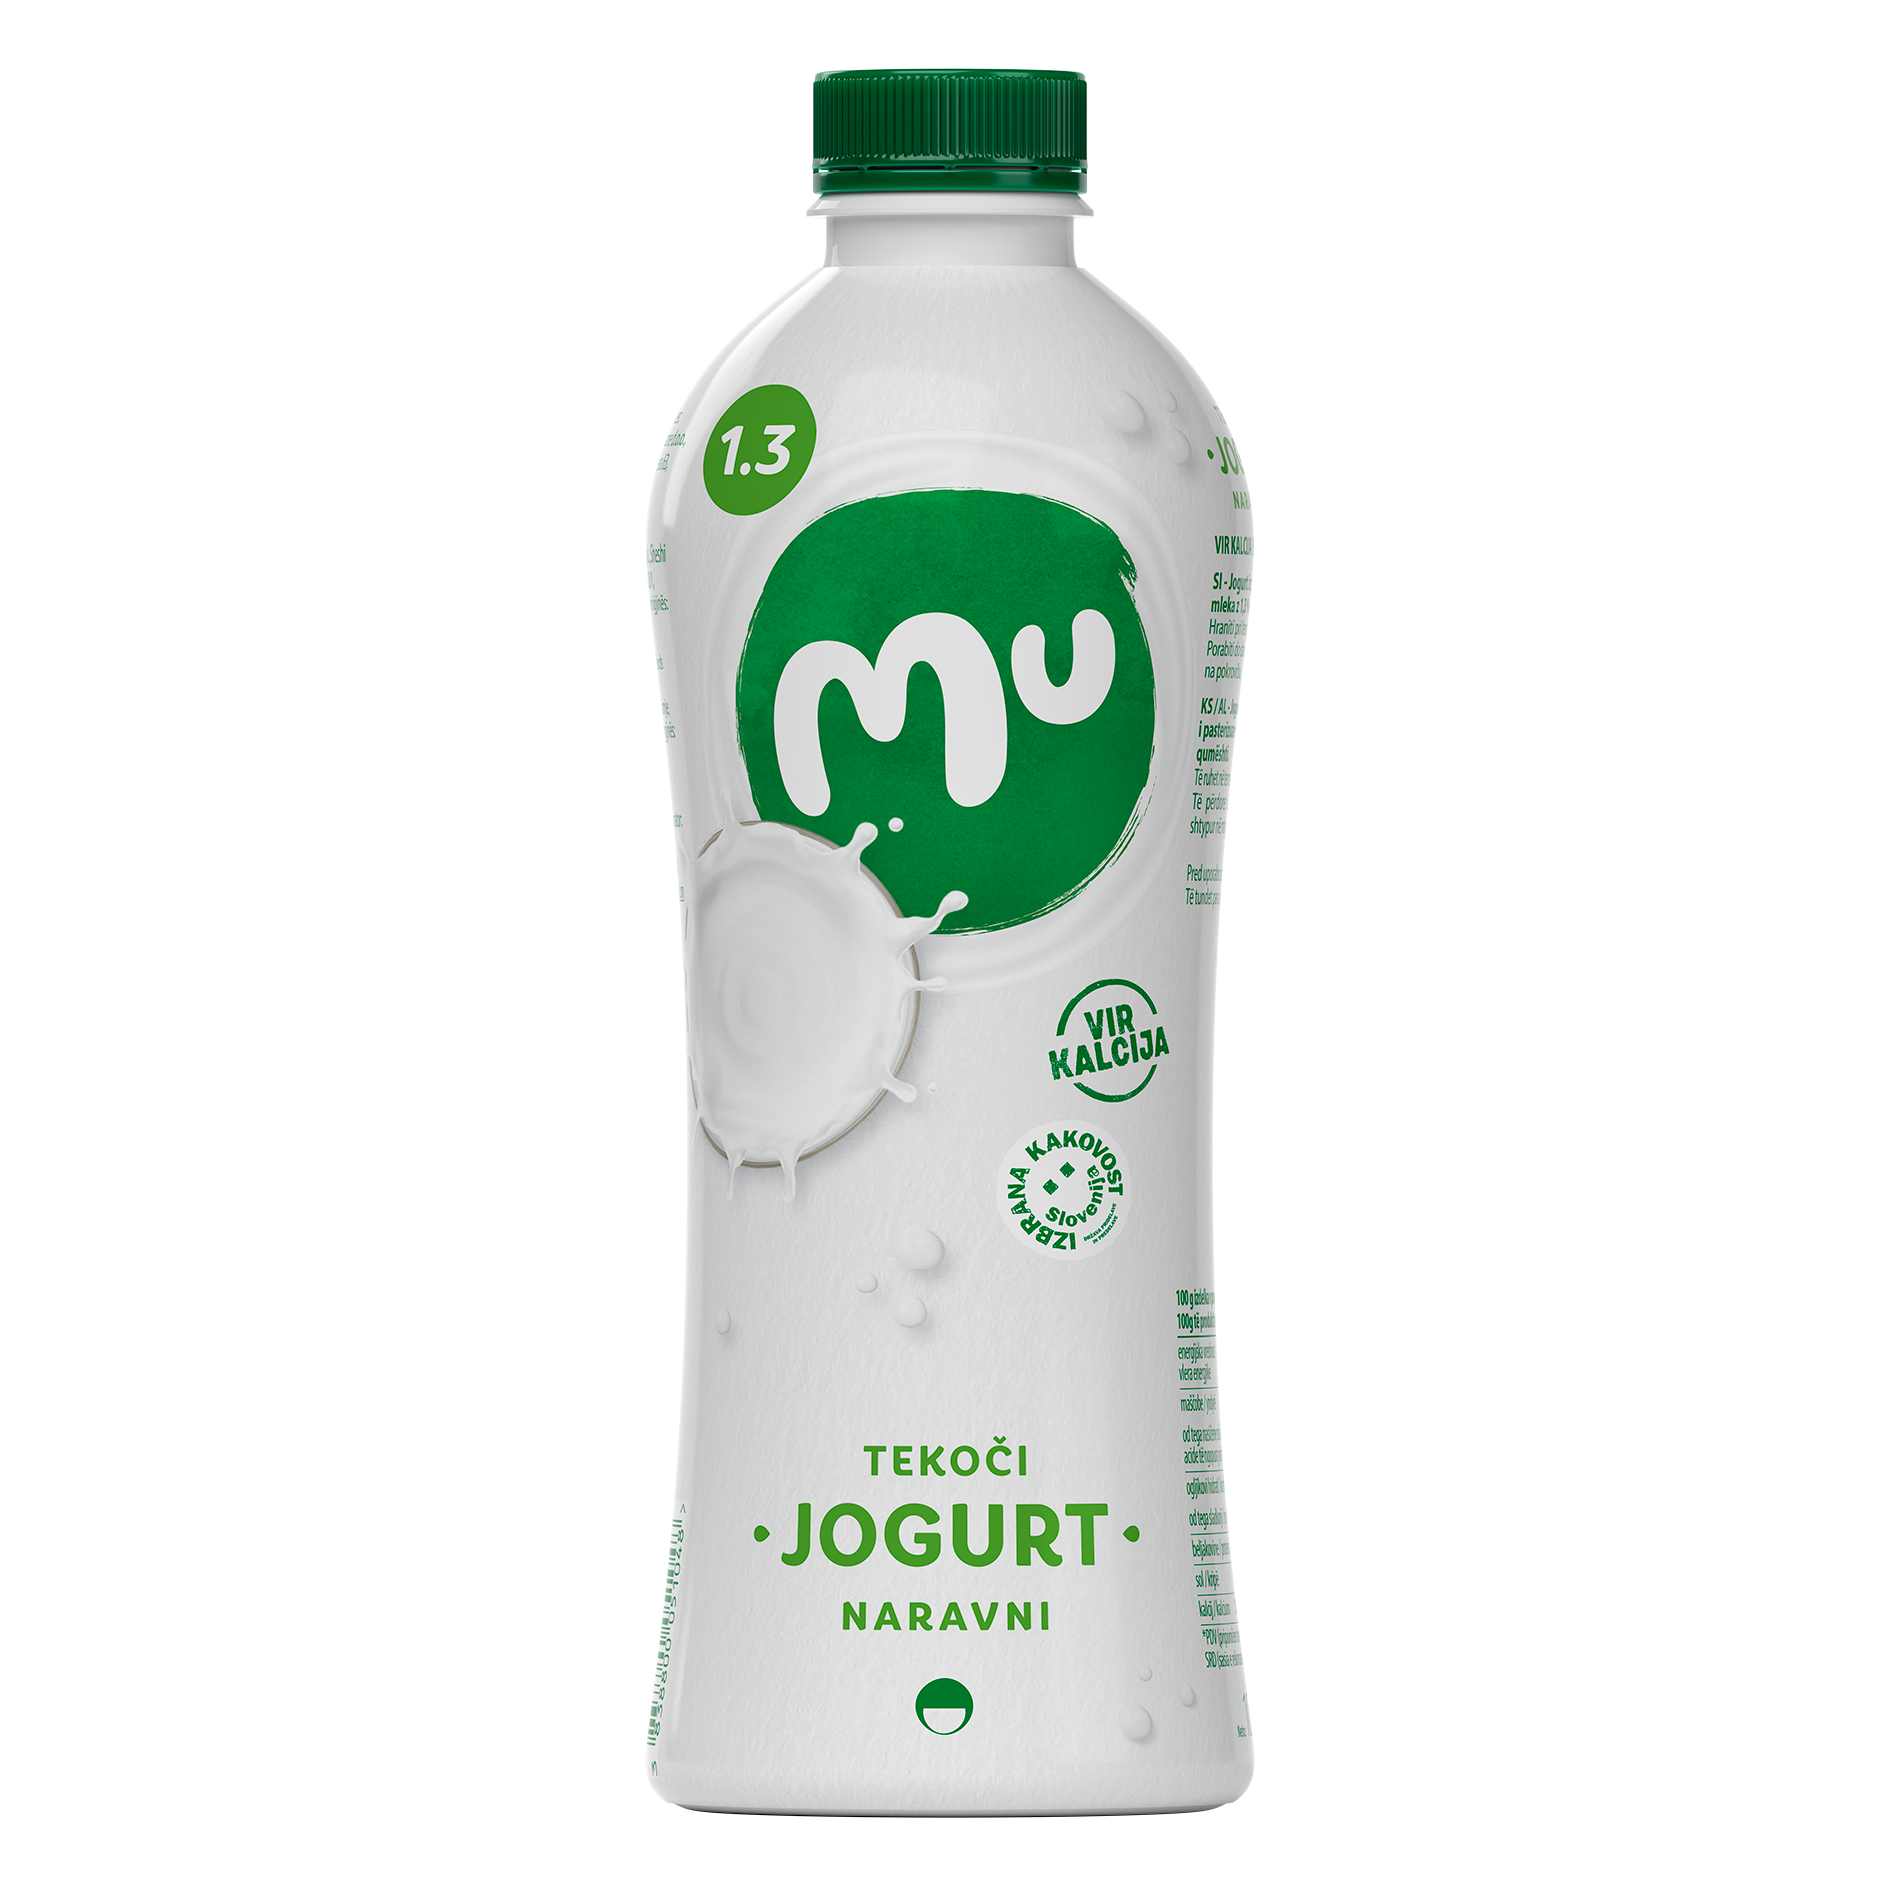 Mu natural drinking yoghurt with 1,3 % milk fat; plastic bottle